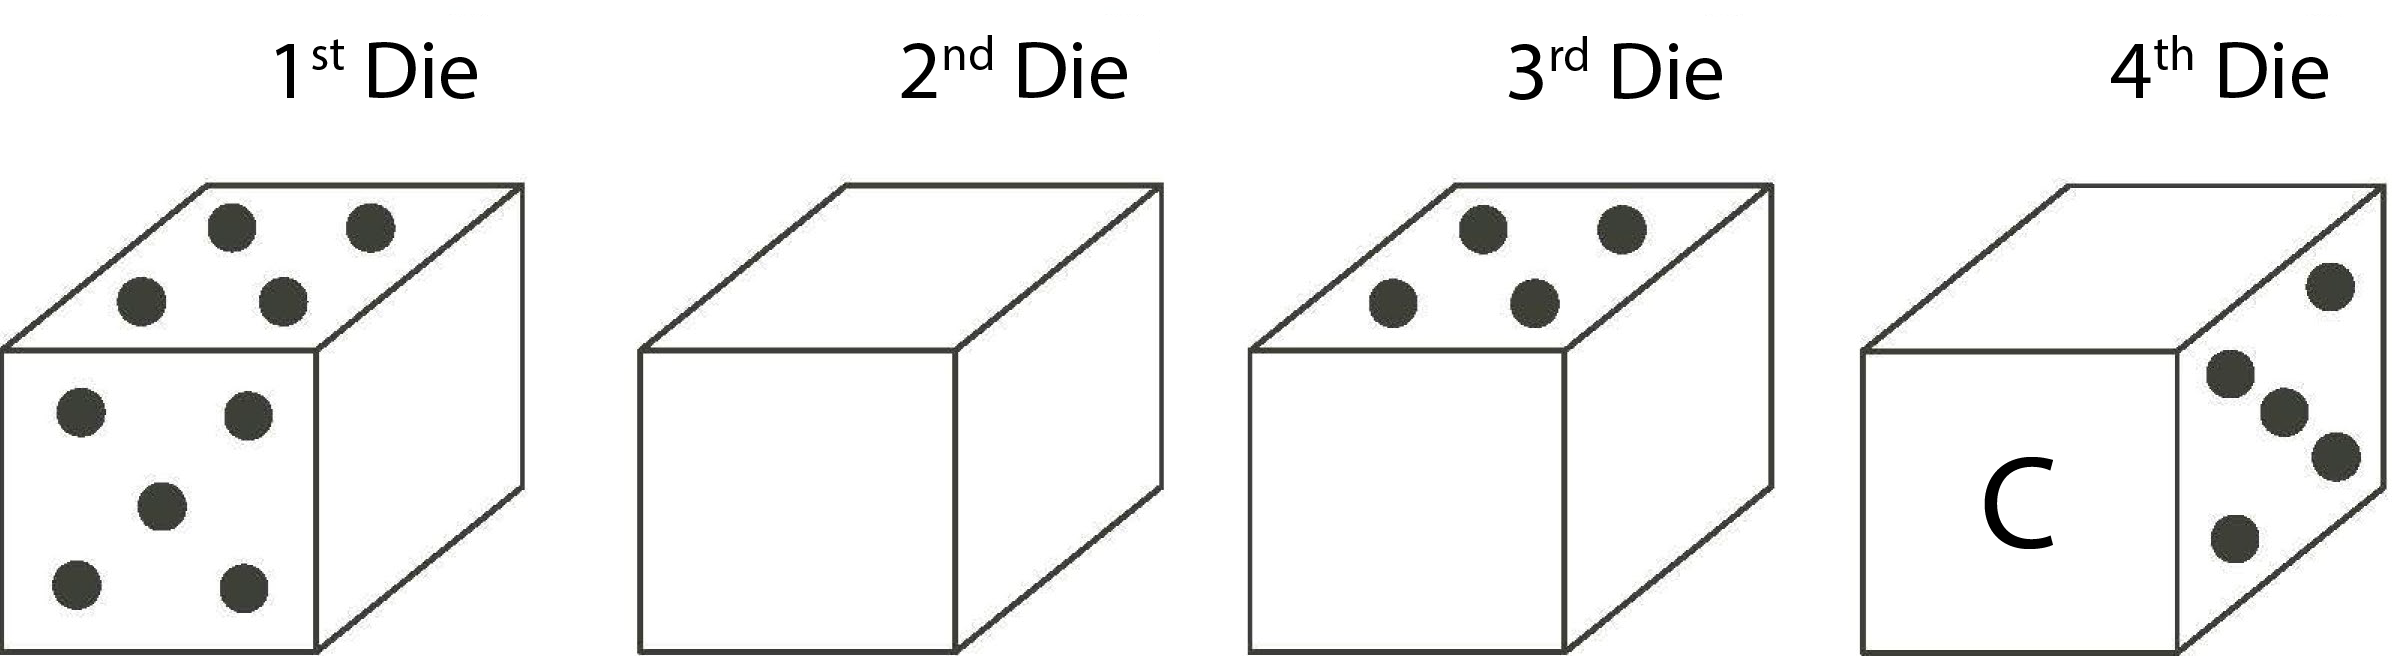 The four dice are labelled first die, second die, third die, and forth die.